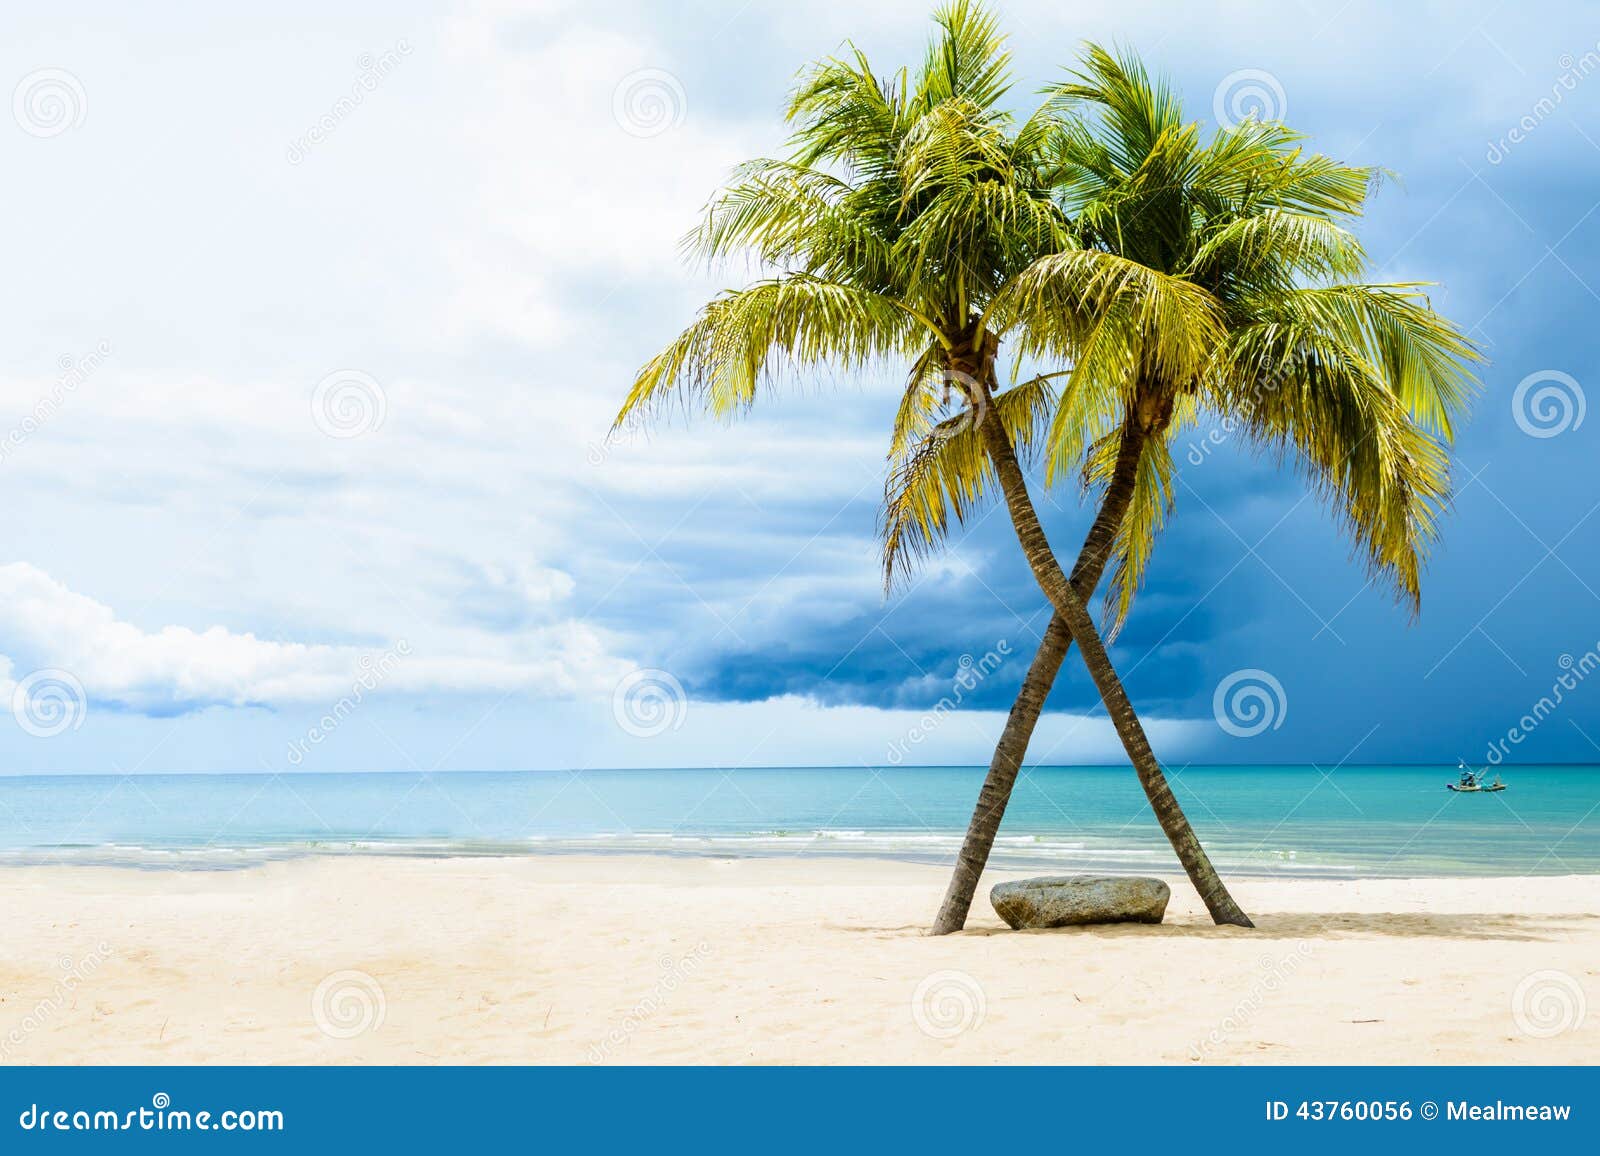 beautiful beach with palms